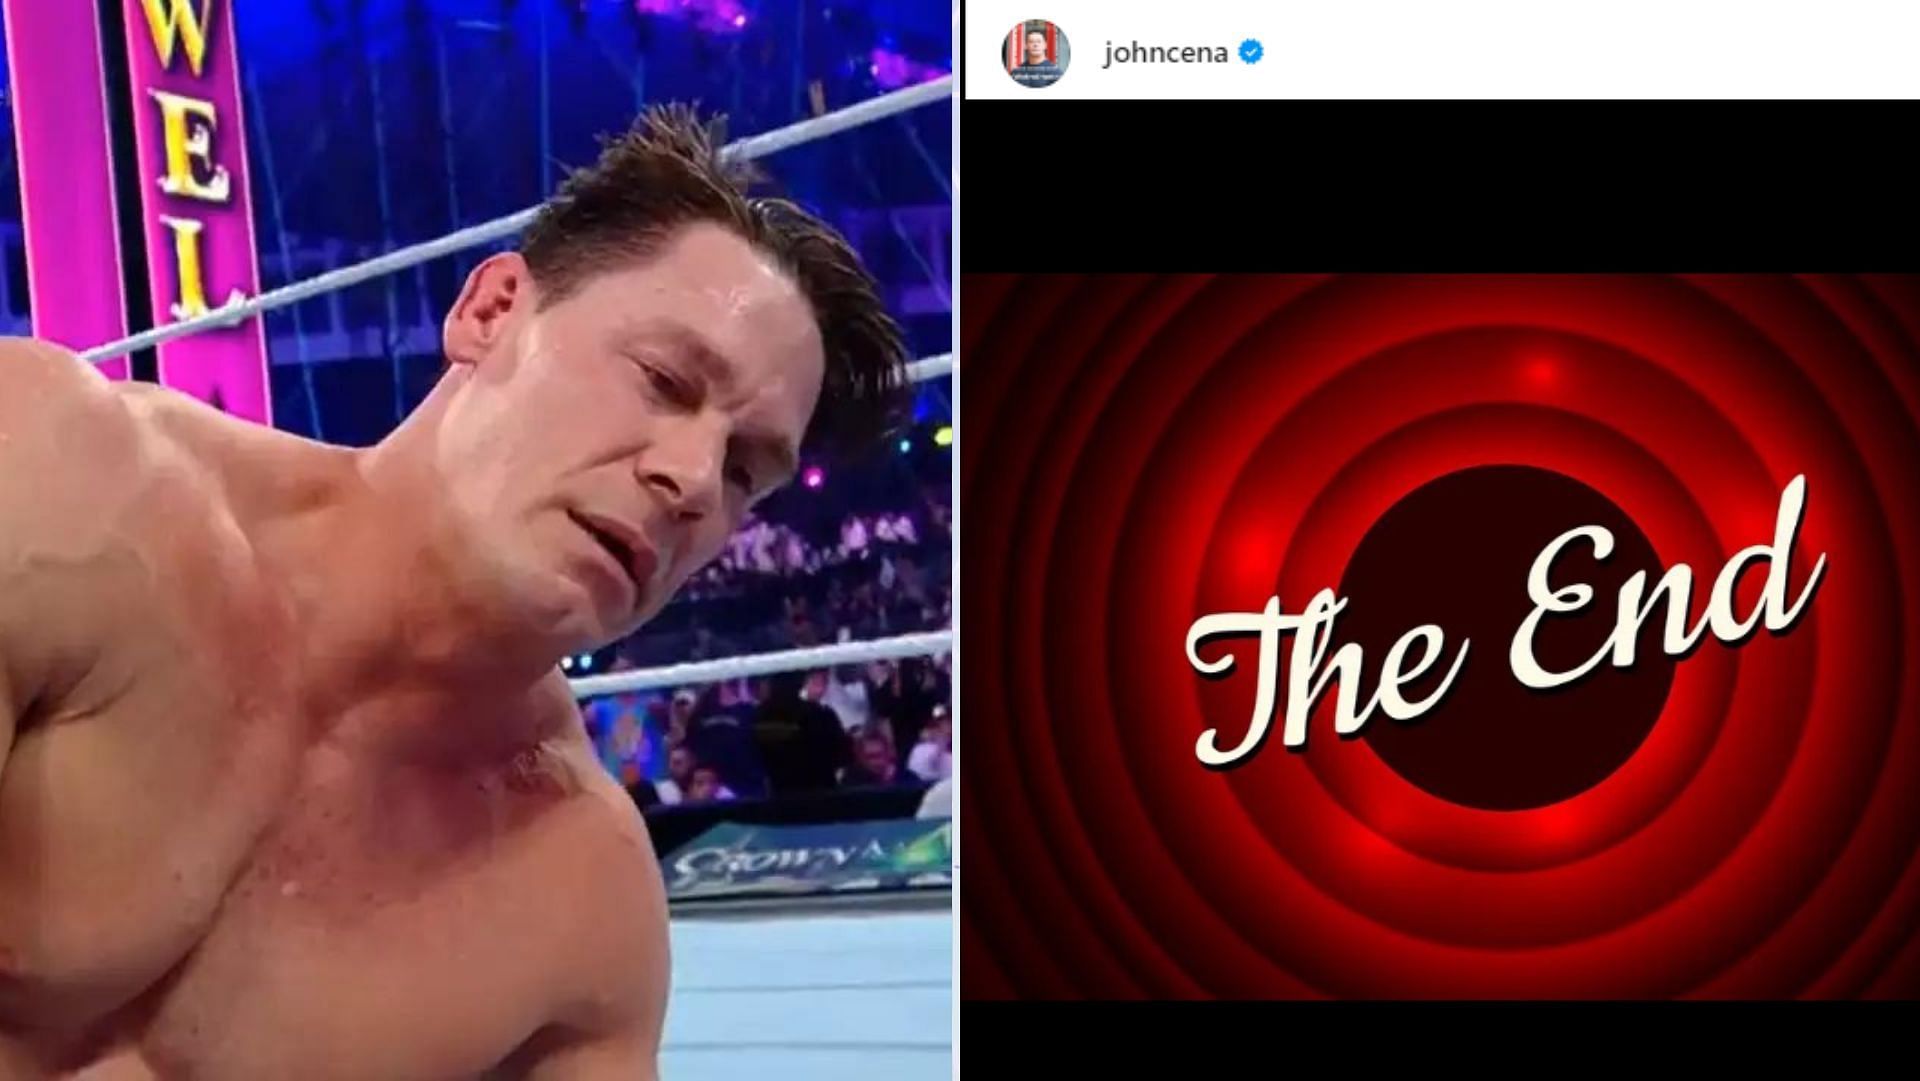 John Cena often posts cryptic messages on social media.